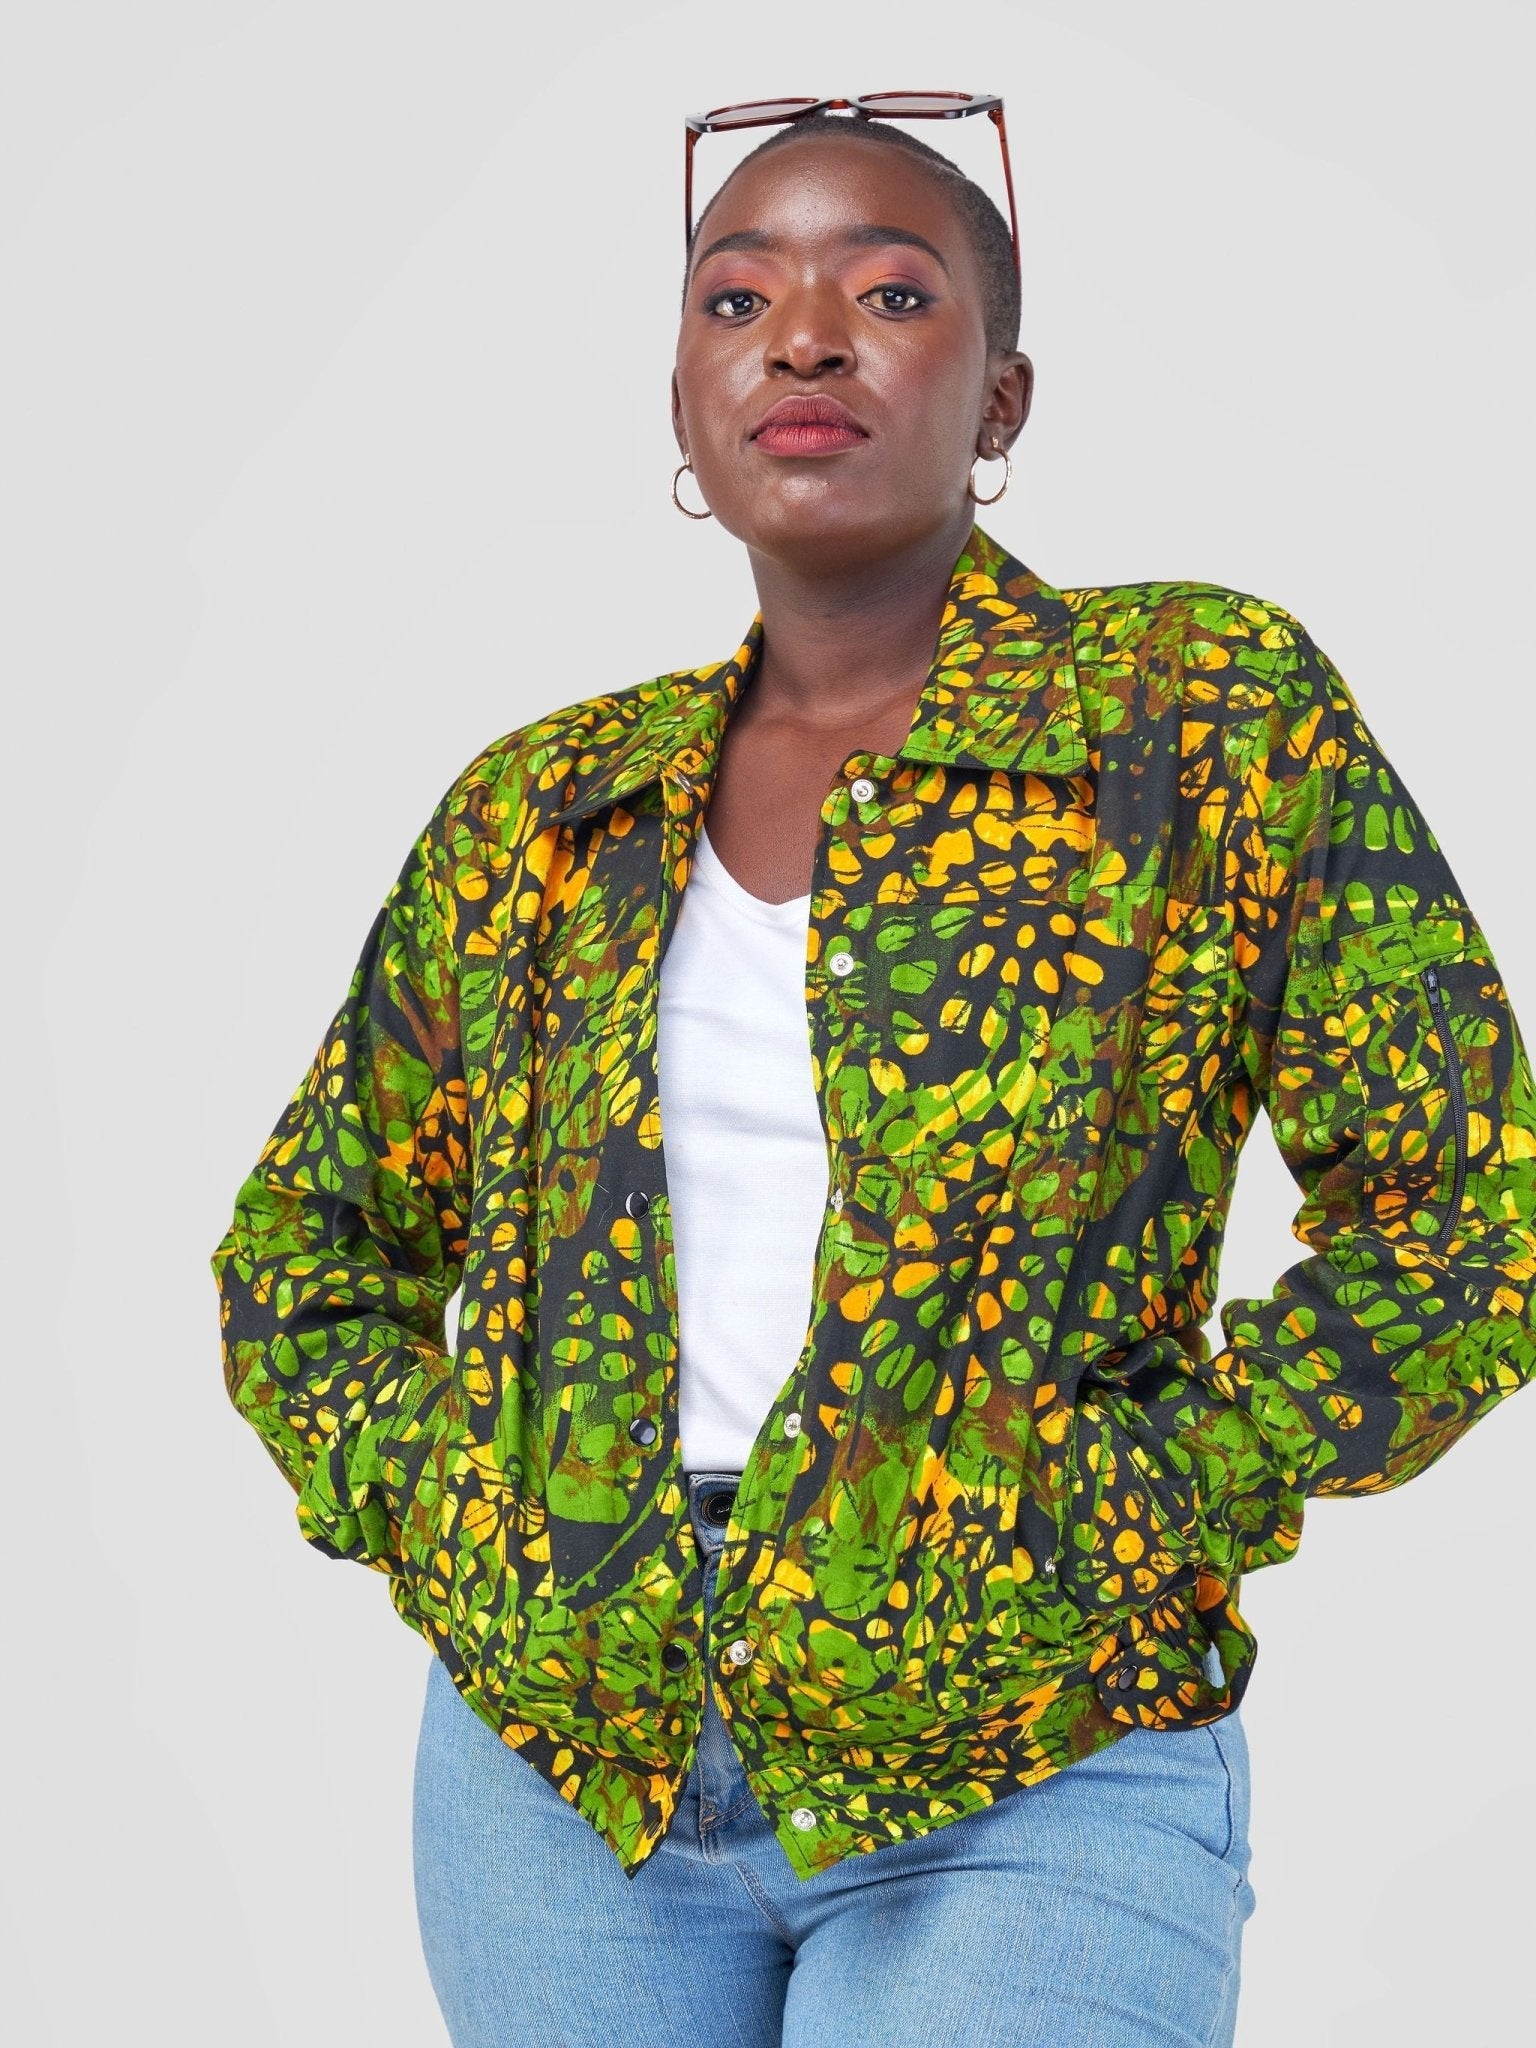 Jacke ‚Bustani‘ für 70 € - mikono.africa Jacken aus Kenia bunte Bomberjacke Partyjacke faire sozial nachhaltig designed in Kenia